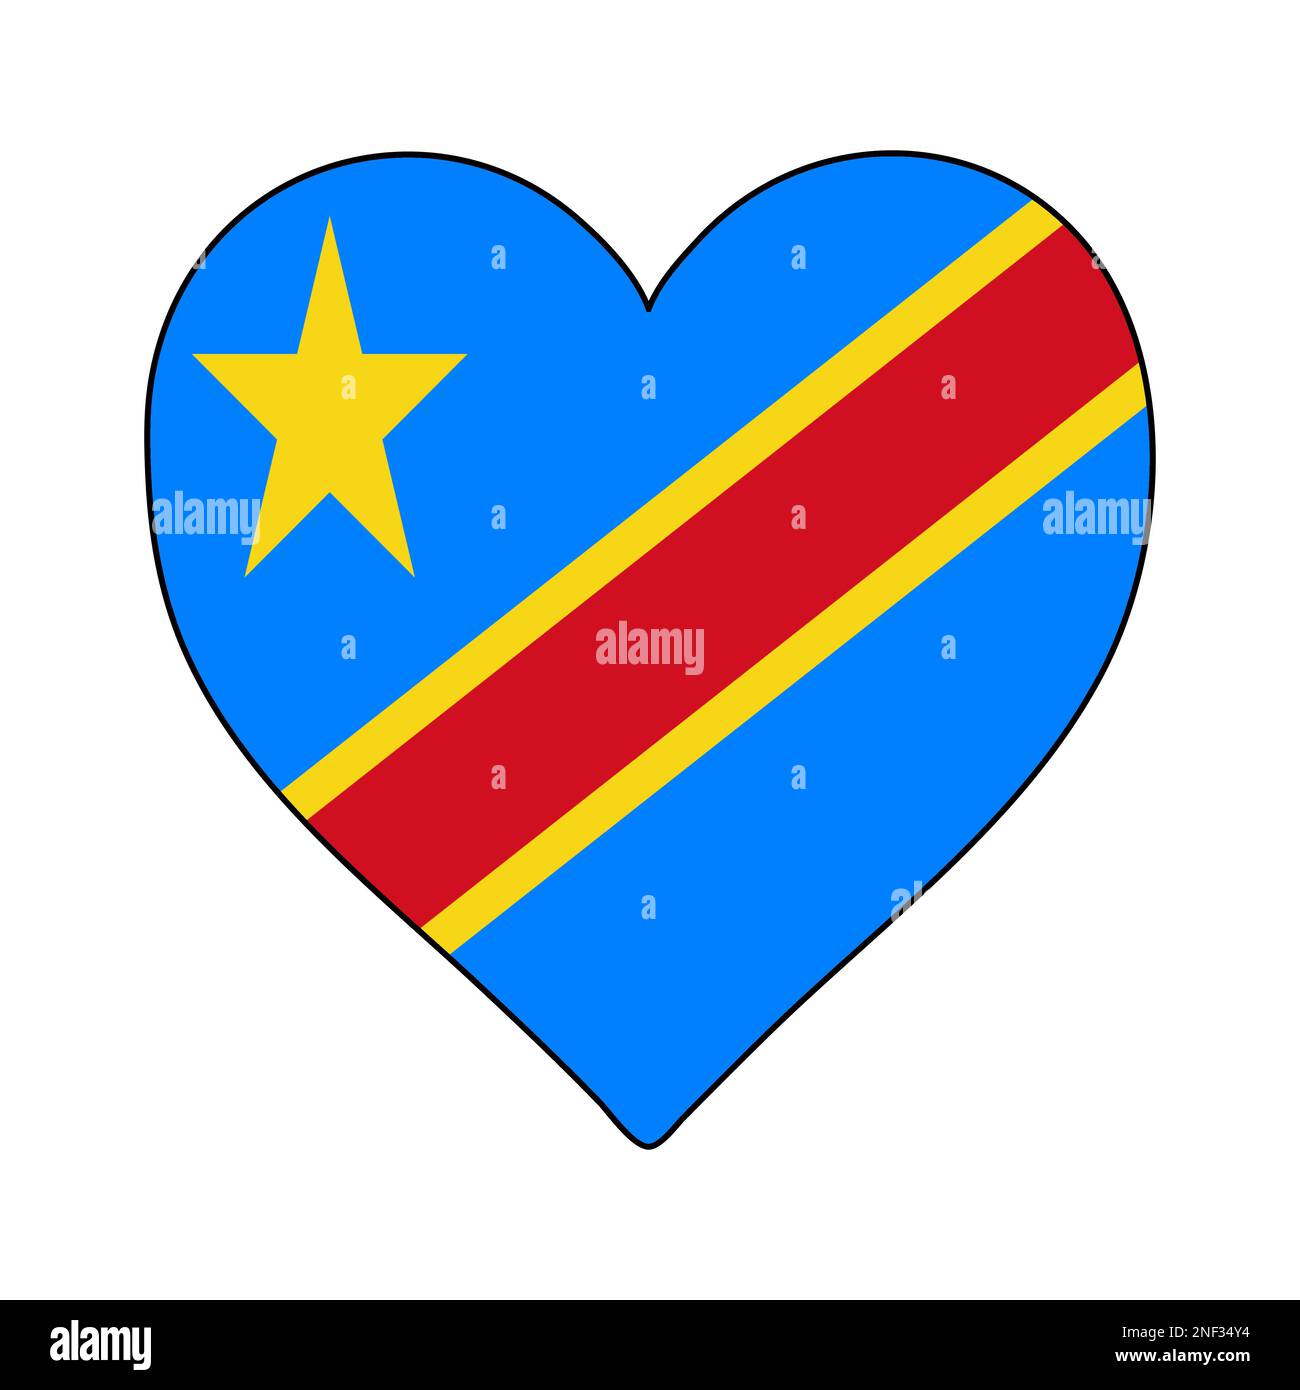 Demokratische Republik Kongo - Herzform Flagge. Ich liebe die Demokratische Republik Kongo. Besuchen Sie die Demokratische Republik Kongo. Mittleres Afrika. Afrika Stock Vektor